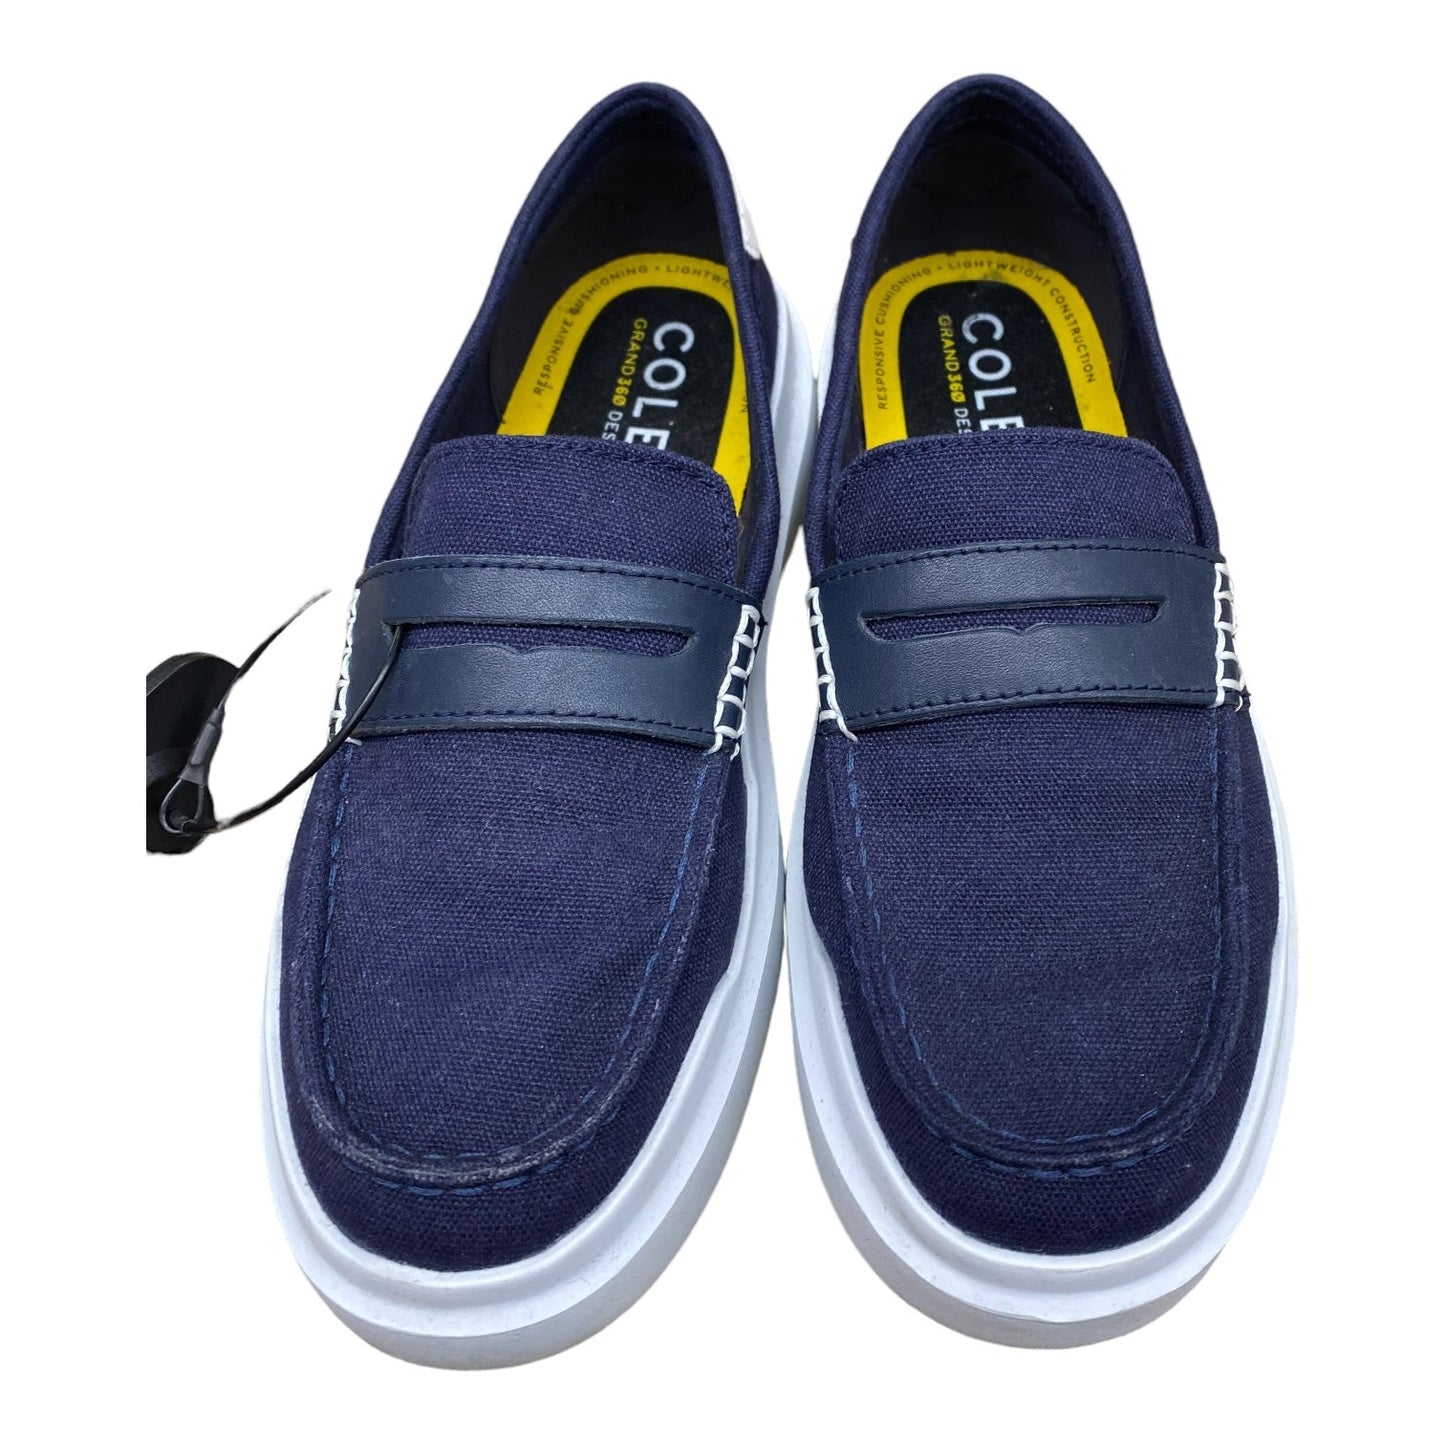 Blue & White Shoes Flats Cole-haan, Size 7